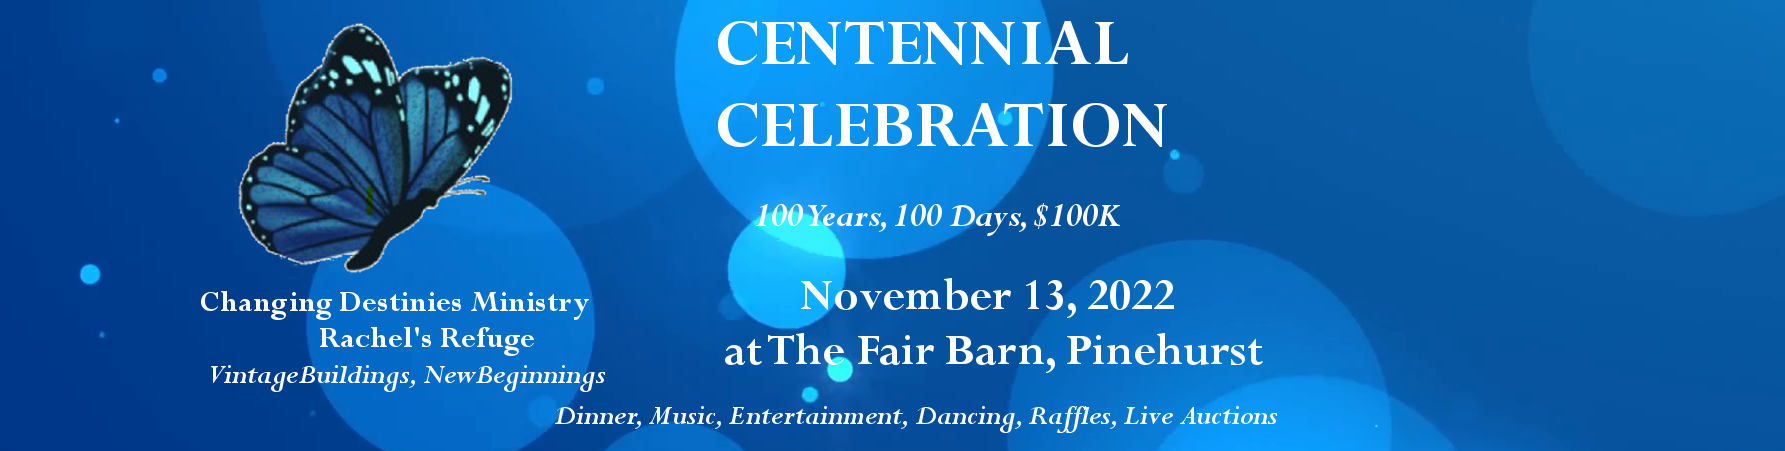 Centennial Celebration